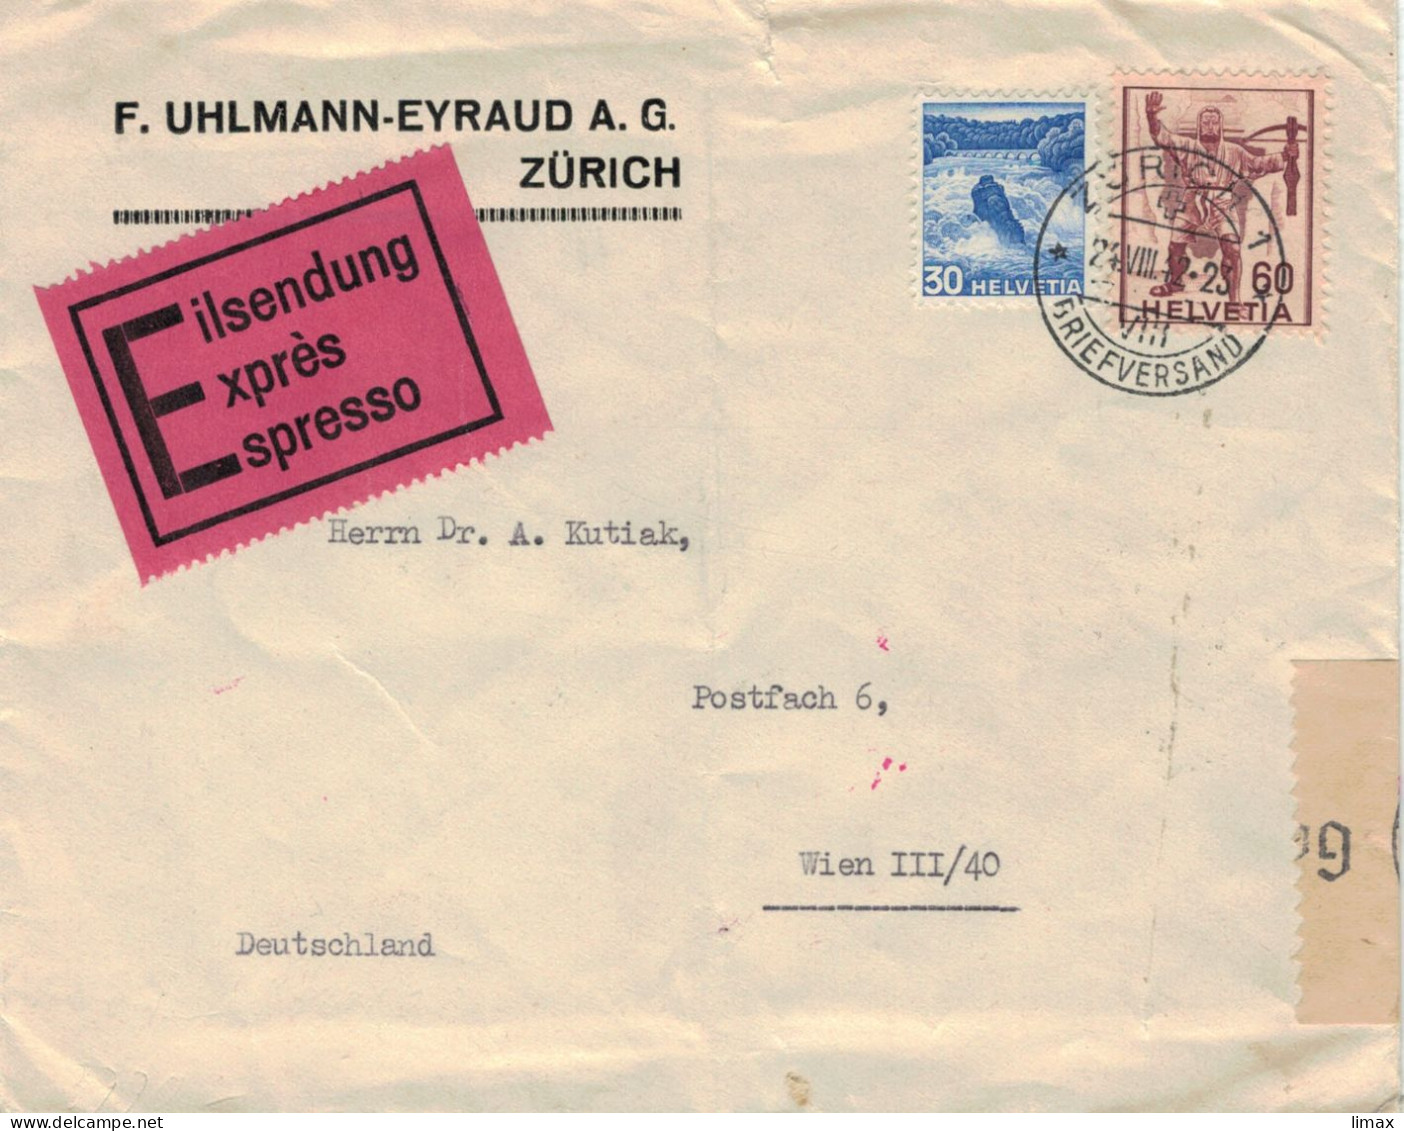 Uhlmann-Eyraud Zürich Briefversand 1942 > Dr. Kutiak Wien - Zensur OKW - Rheinfall Armbrust-Schütze Eilsendung - Covers & Documents